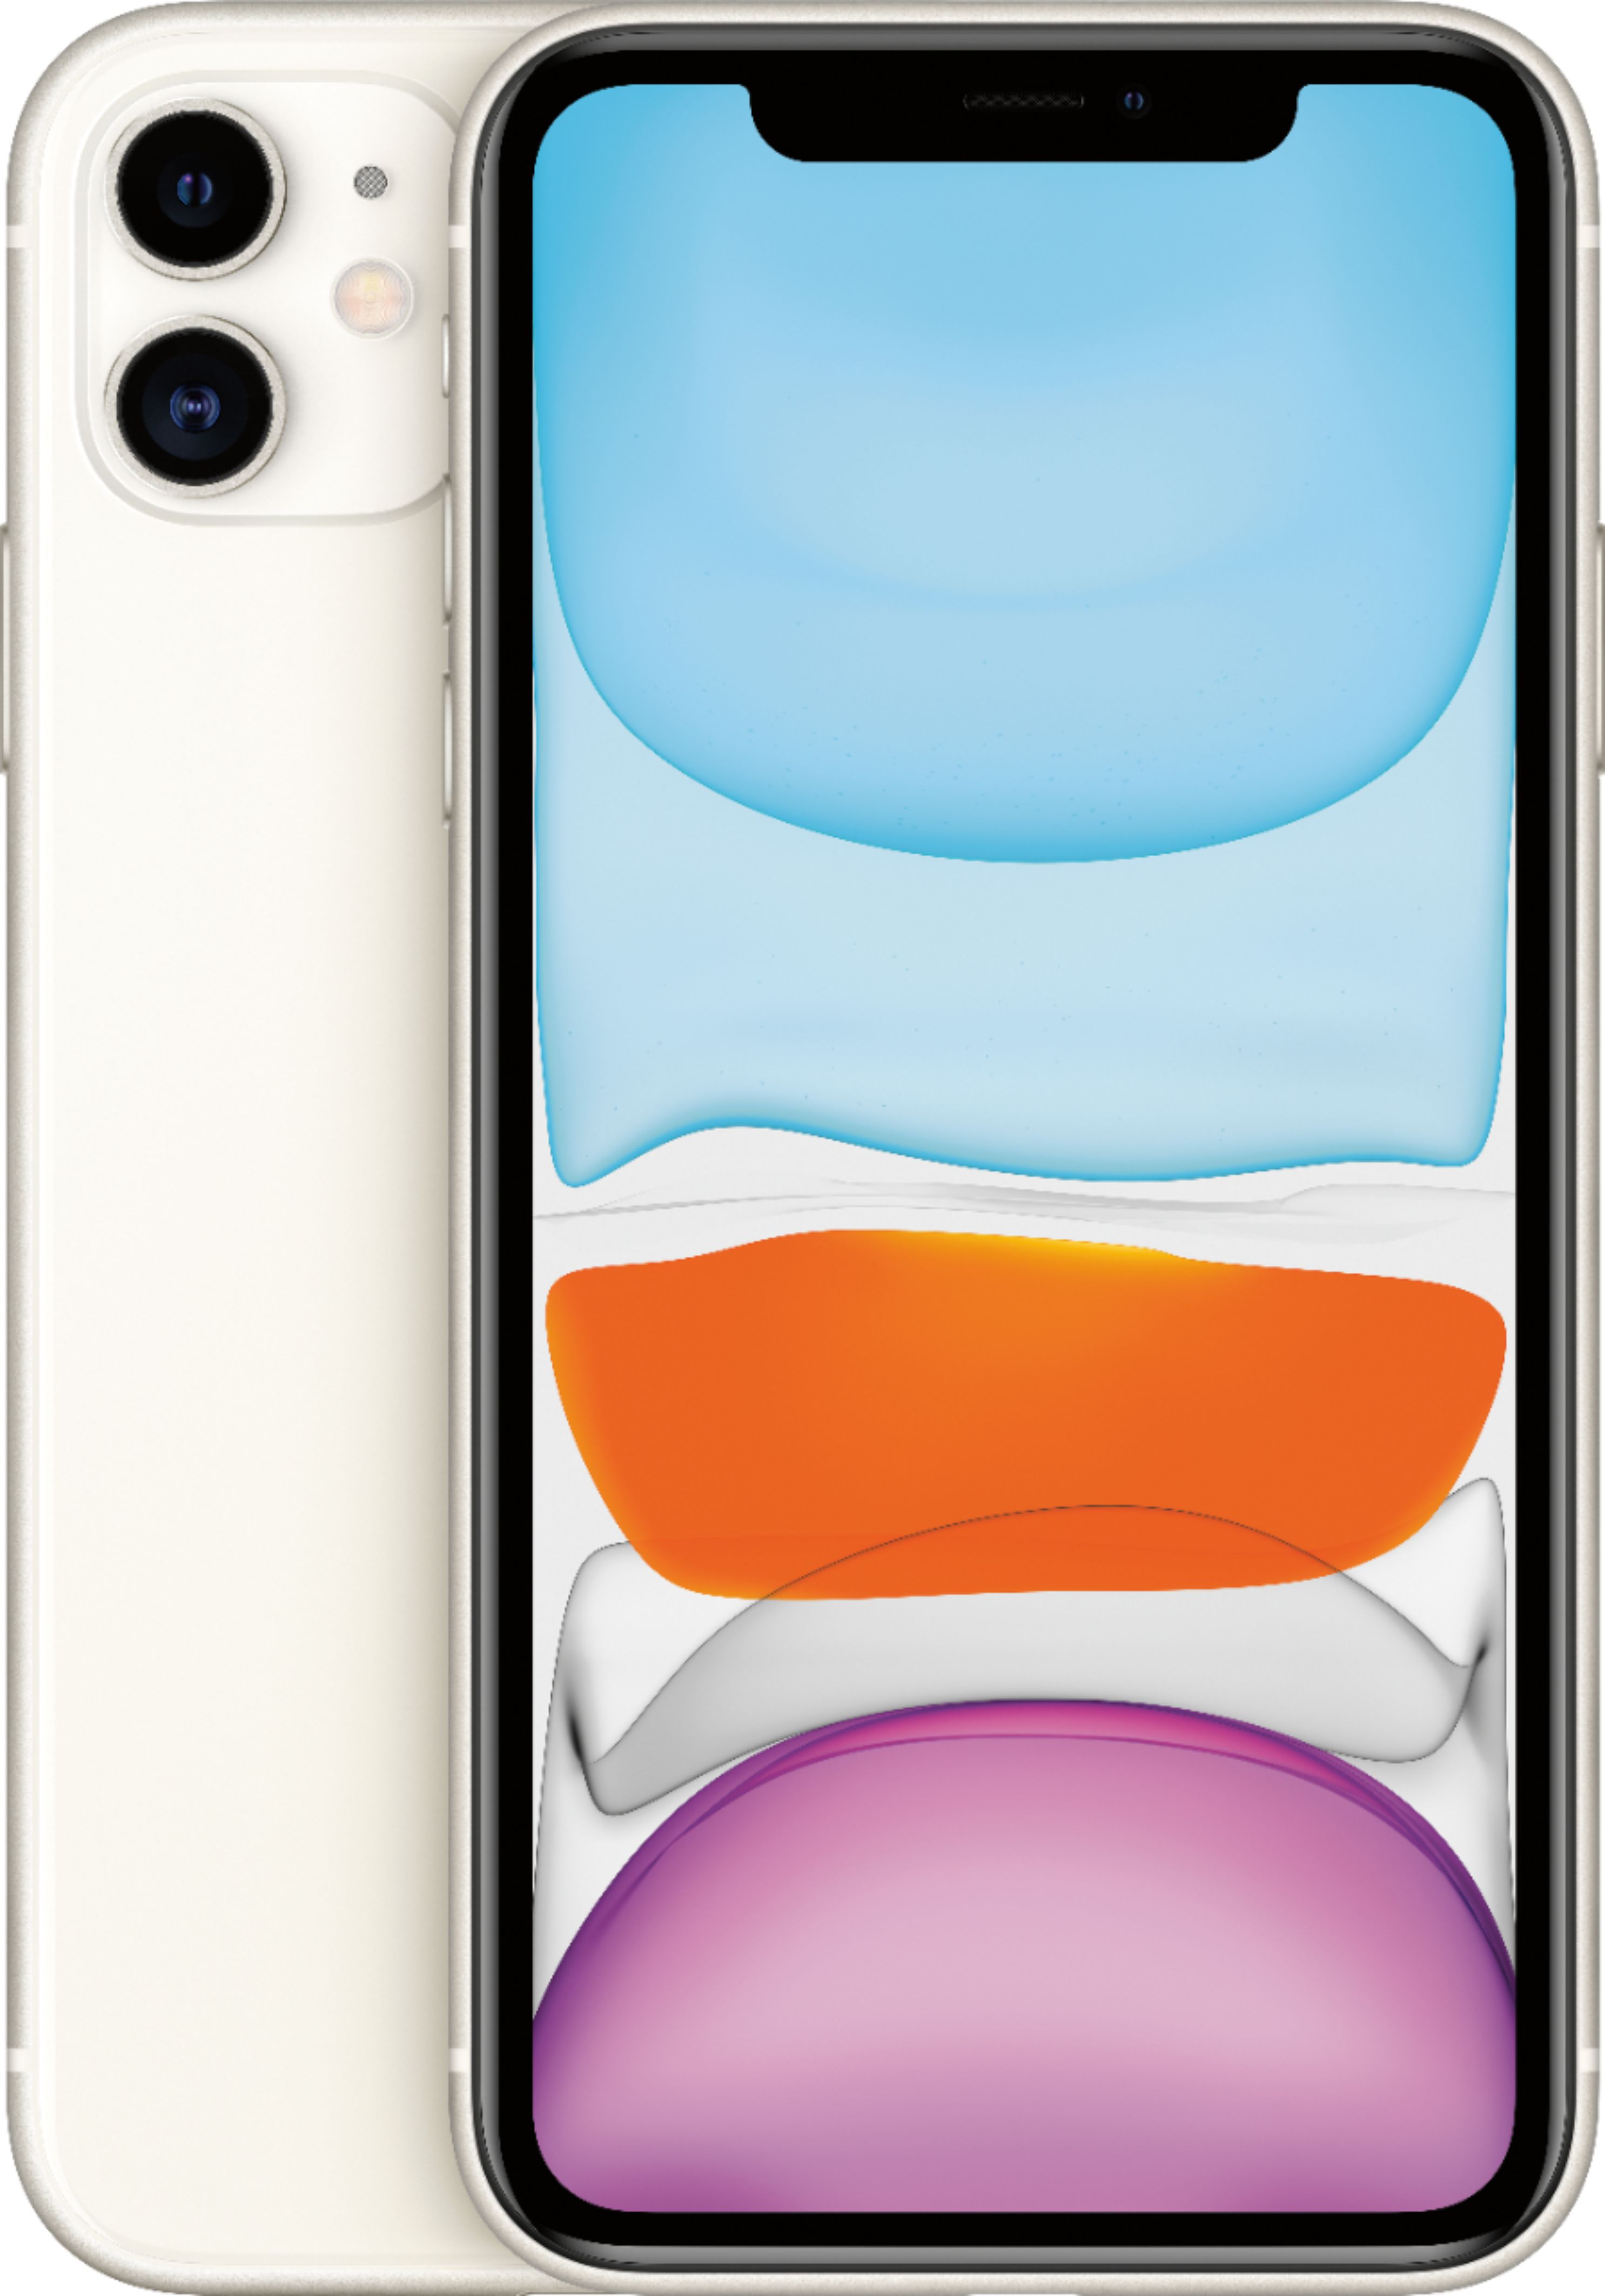 Customer Reviews Apple iPhone 11 128GB White (Unlocked) MWKV2LL/A